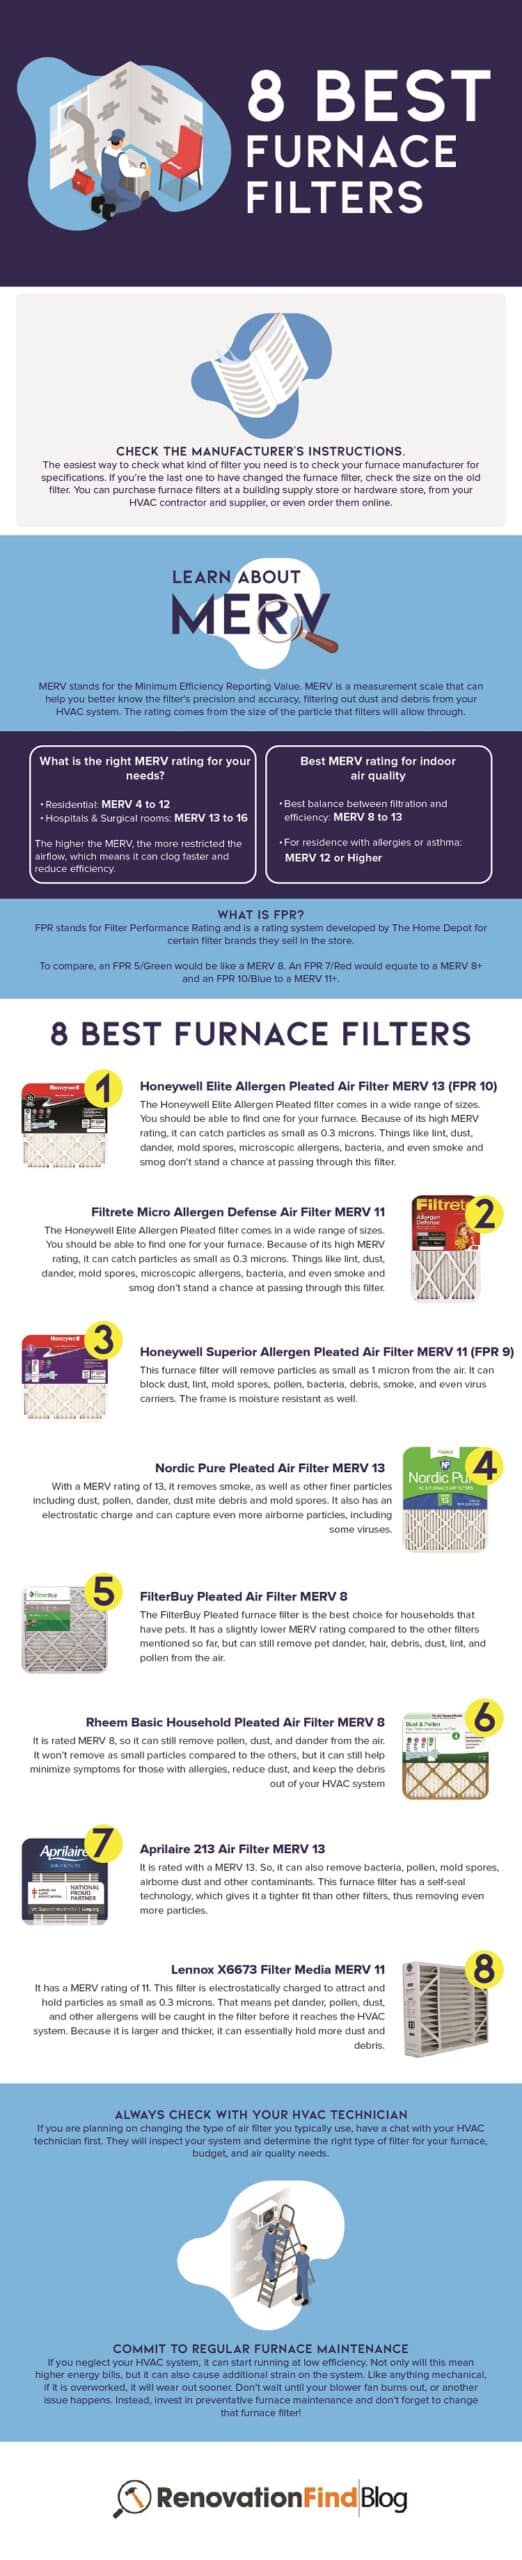 8 Best Furnace Filters